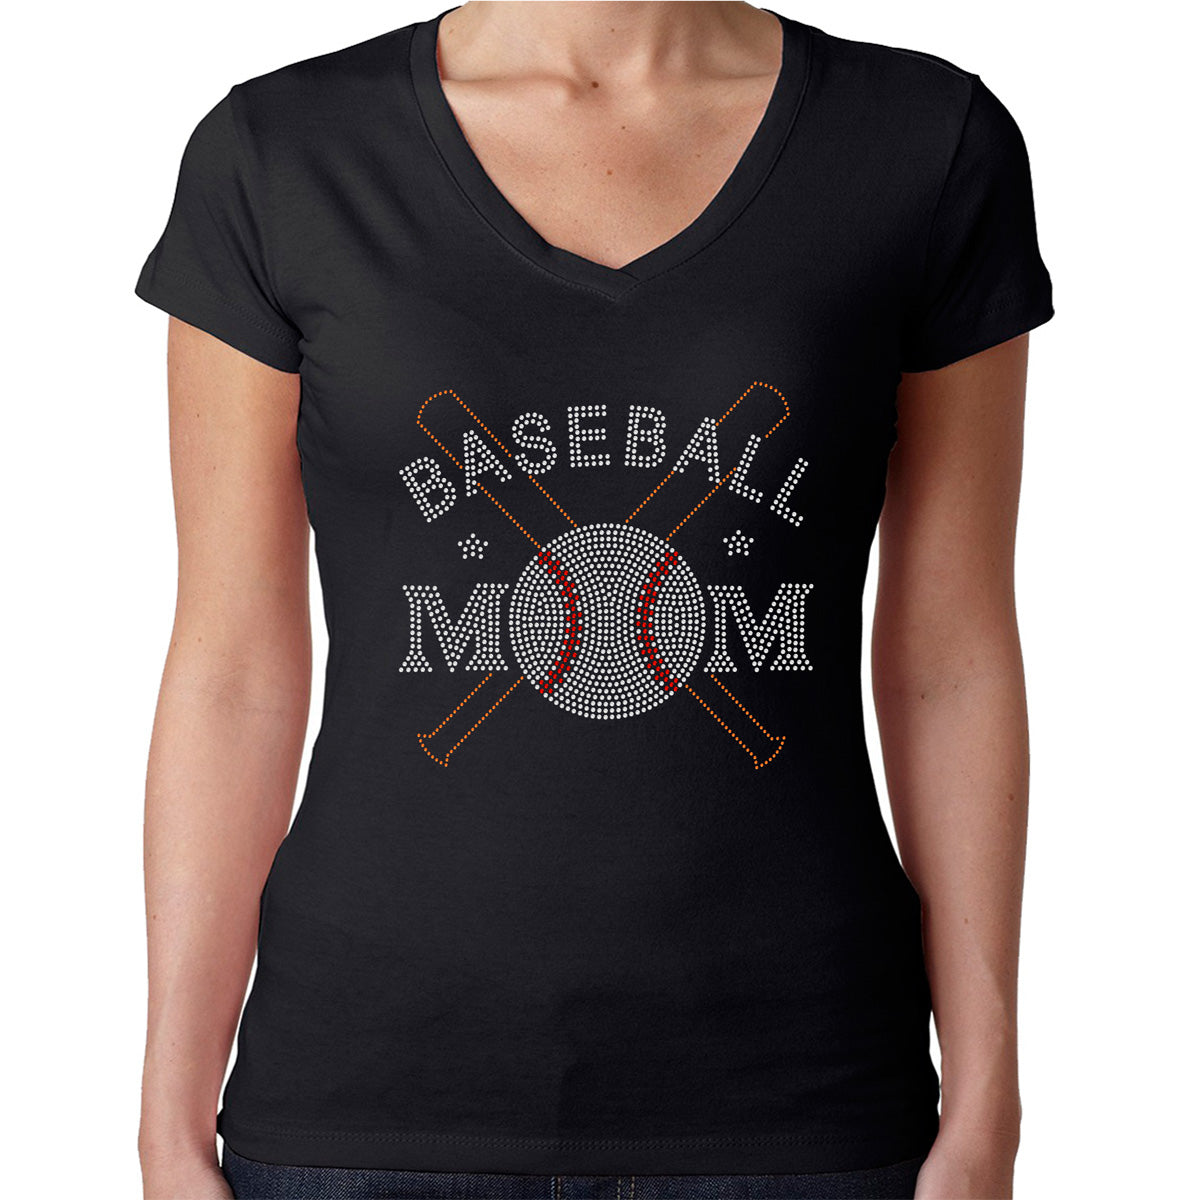 Womens T-Shirt Rhinestone Bling Black Fitted Tee Baseball Mom Bats Ball